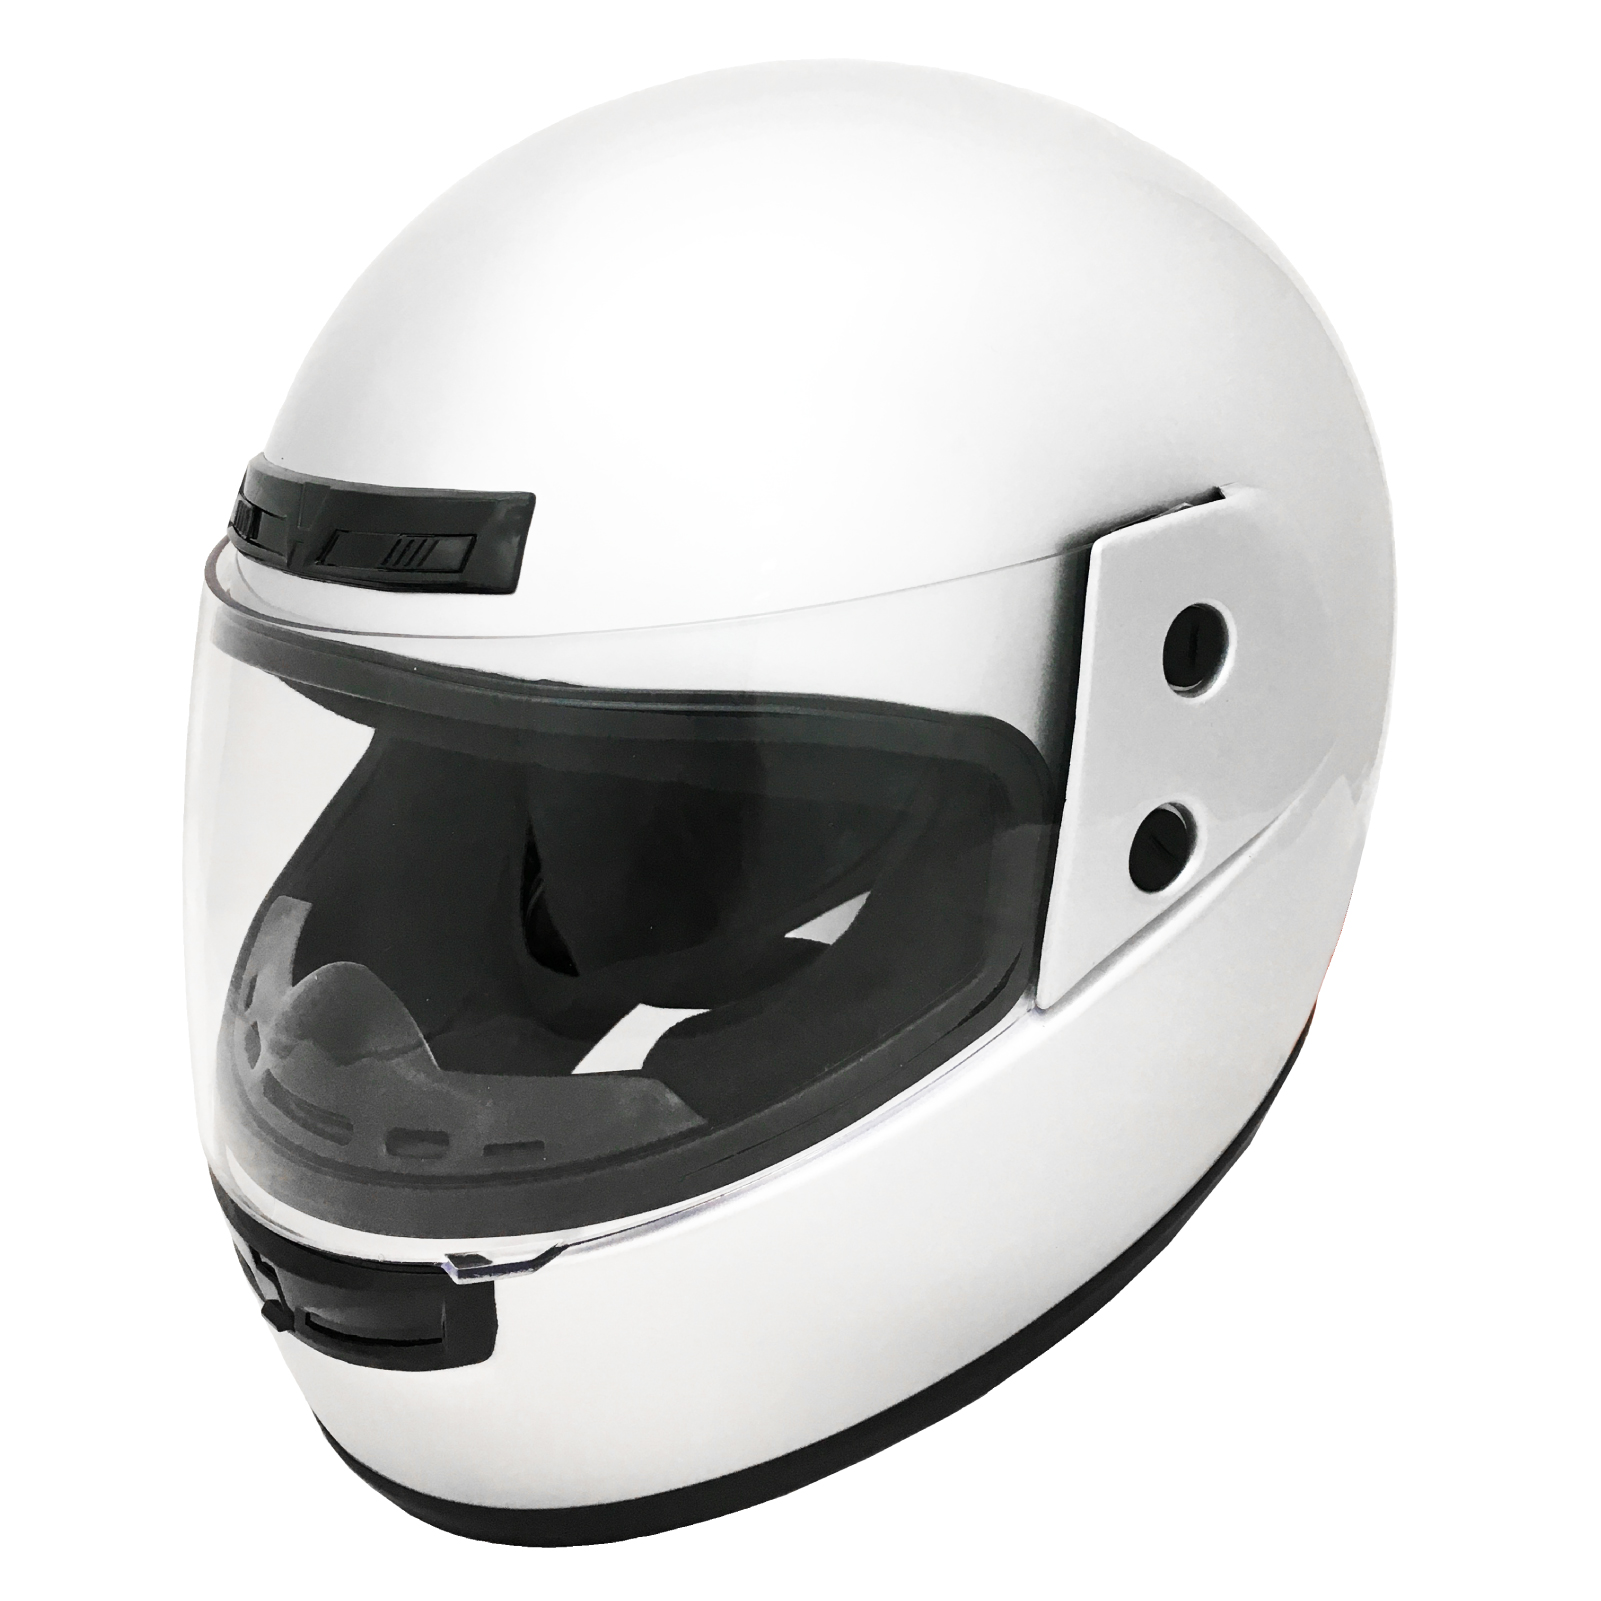 Power7 フルフェイス ヘルメット フリーサイズ 全排気量対応 57-60cm PSC SG レディース メンズ ジェット ヘルメット  シールド付き UV加工 バイク [P7-100]